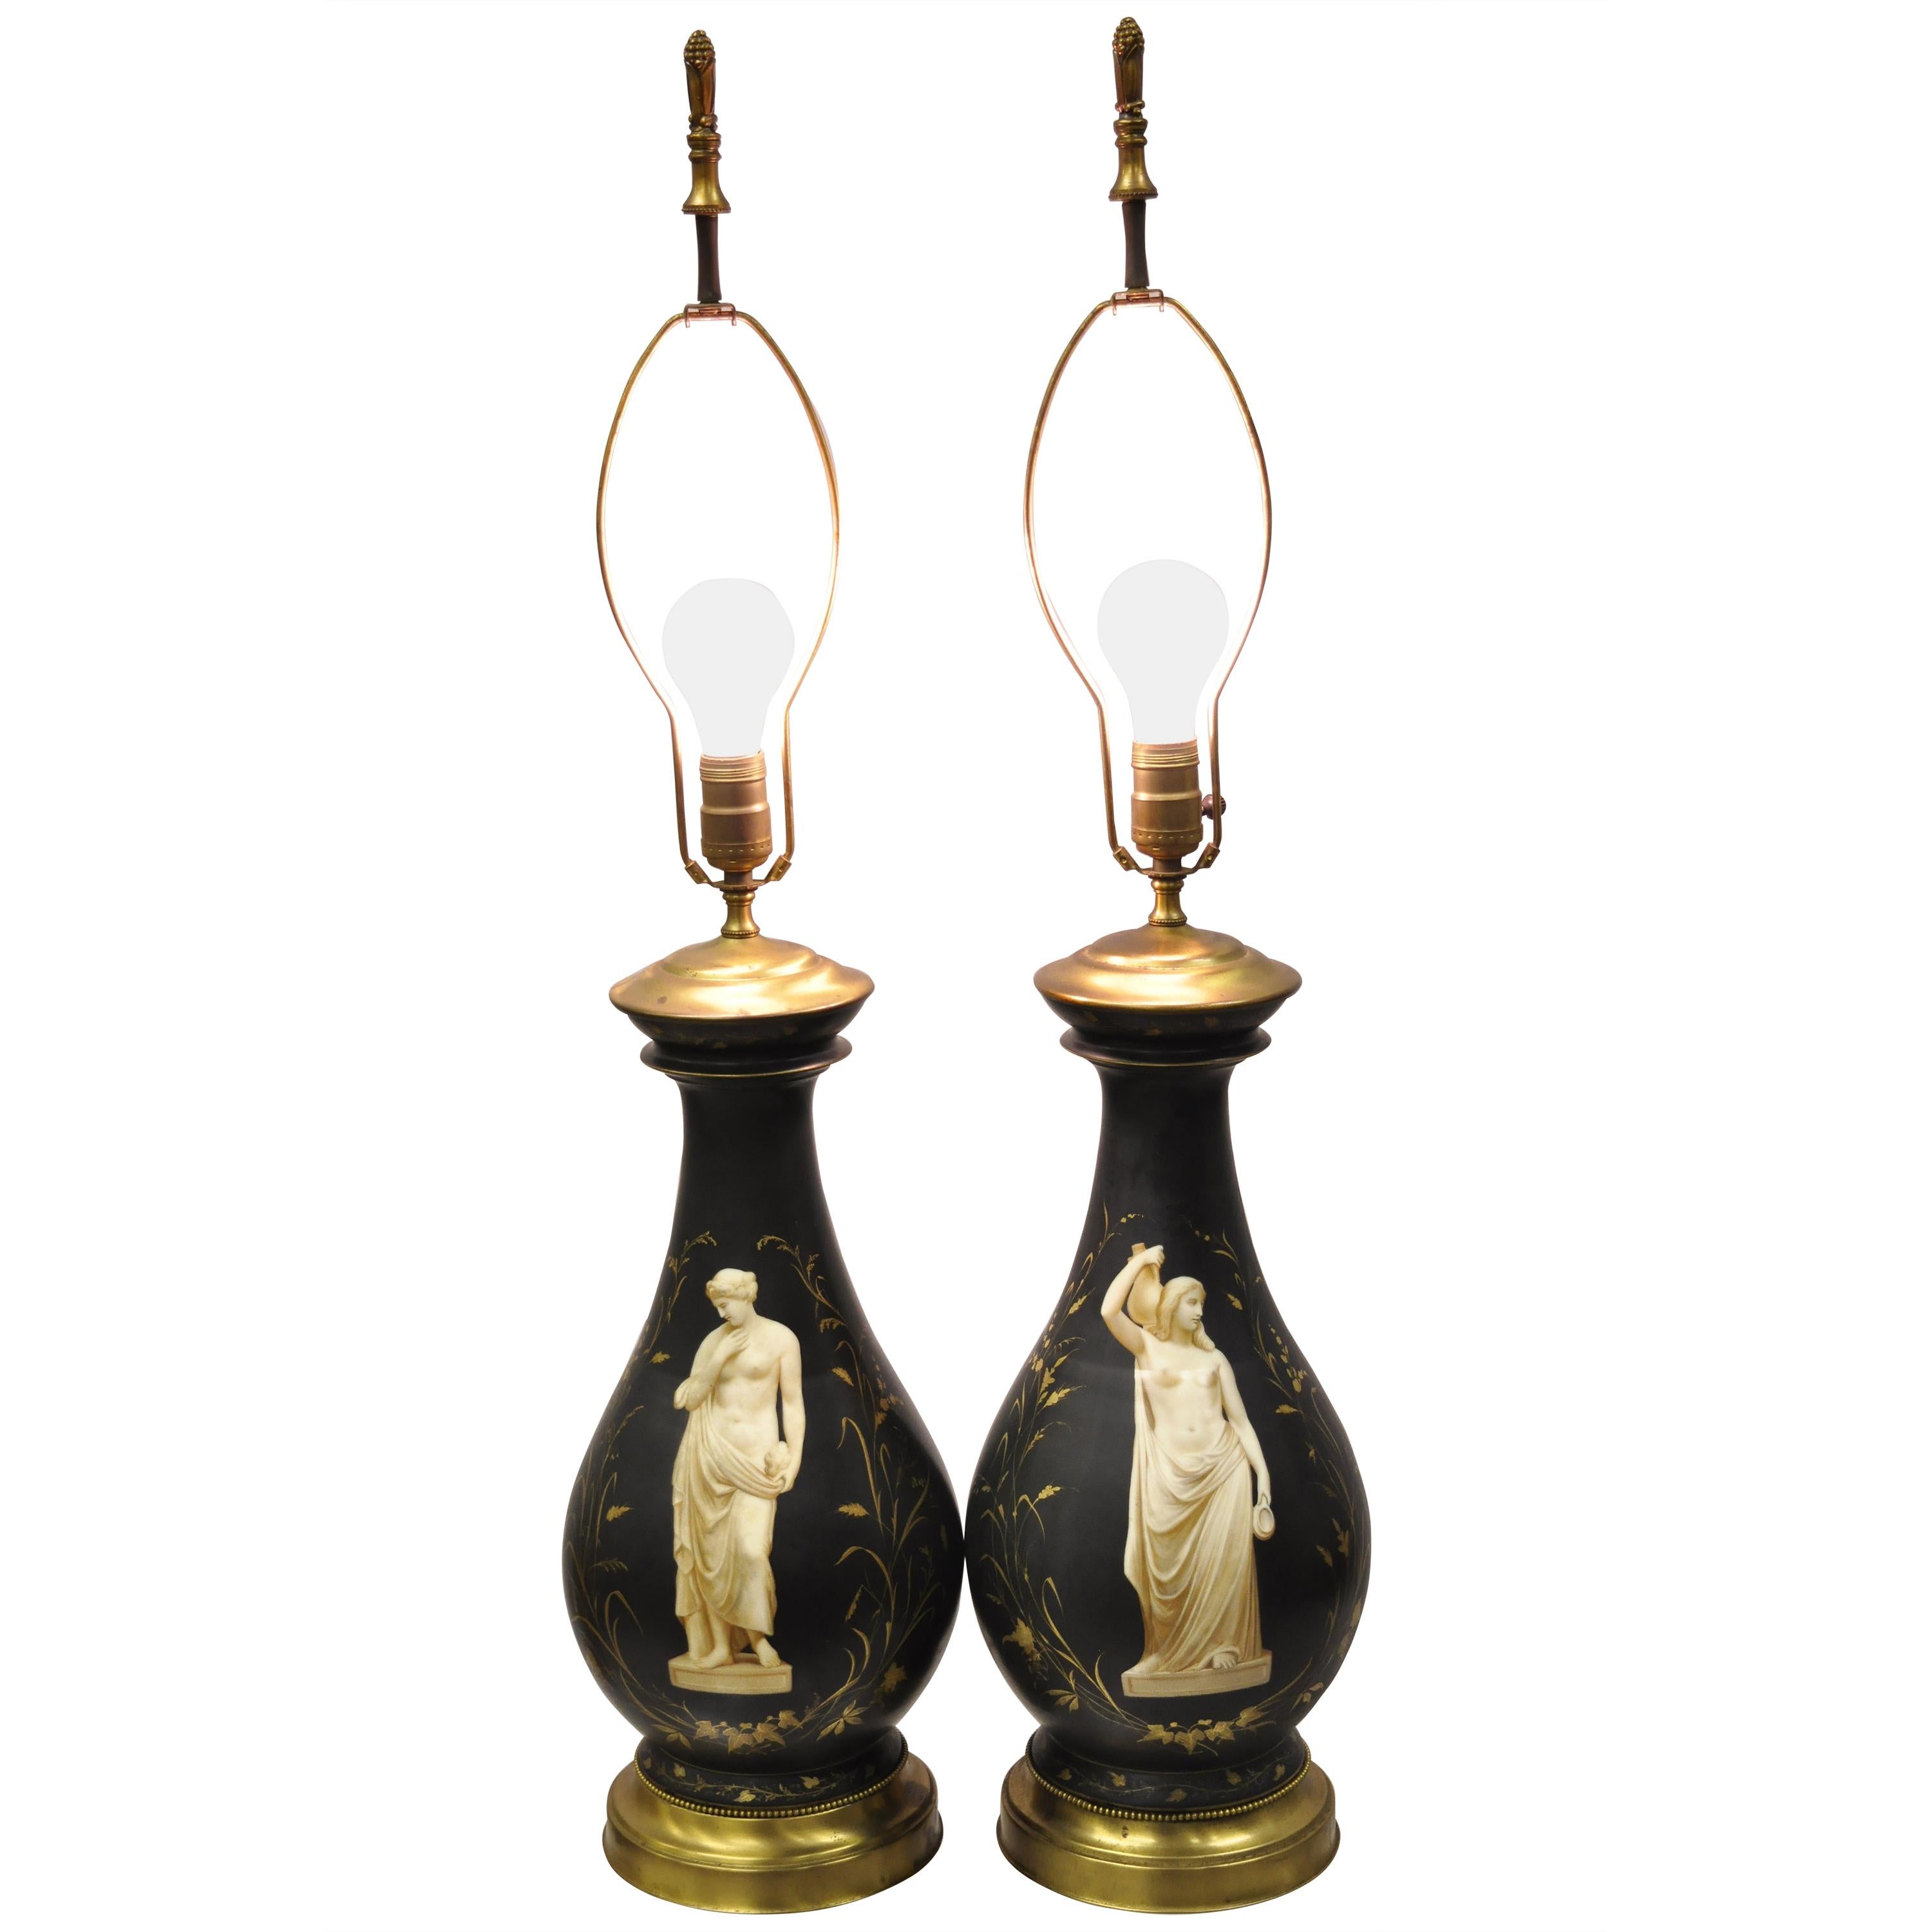 Antique French Neoclassical Black Porcelain Classical Bulbous Table Lamps, Pair